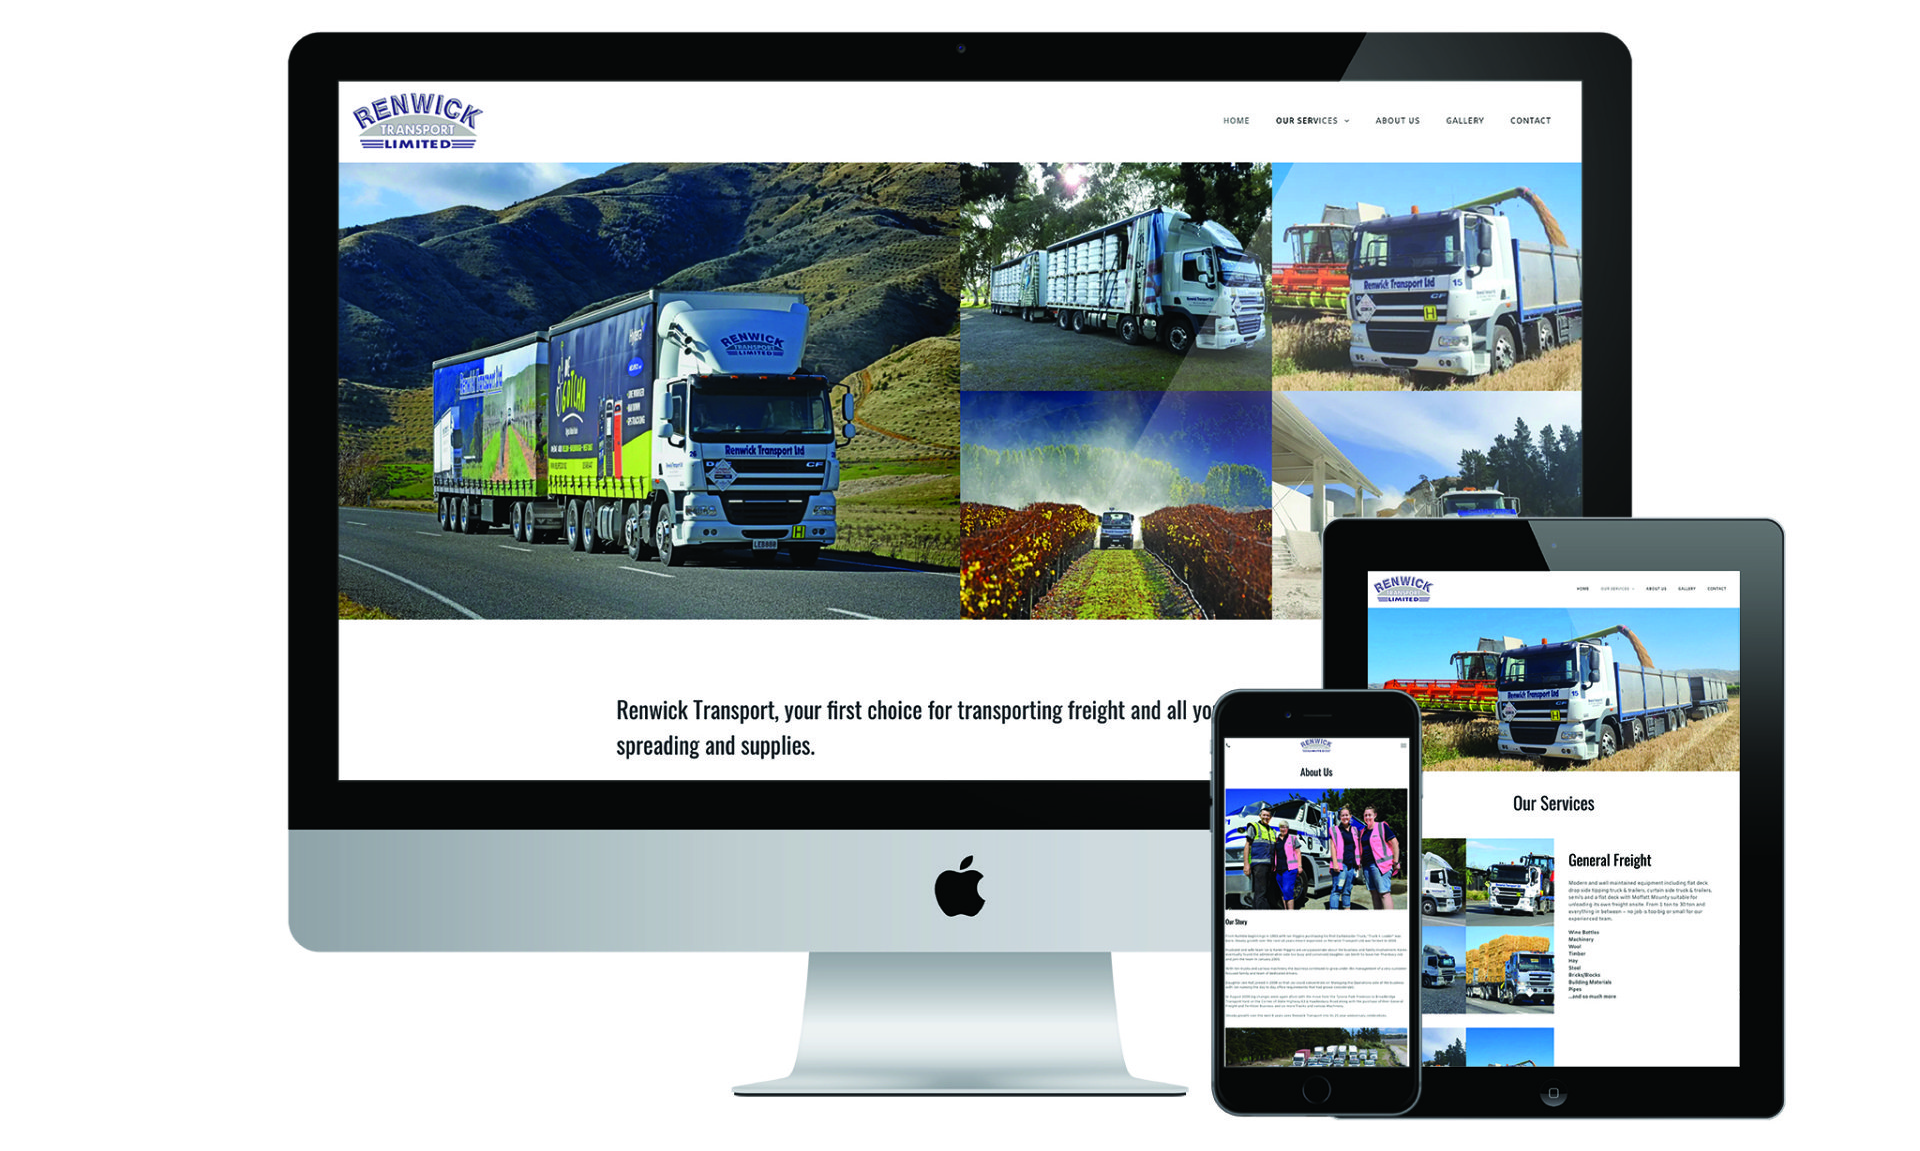 Renwick Transport website designed by Vanilla Hayes creative graphic design  studio in Blenheim, Marlborough, New Zealand